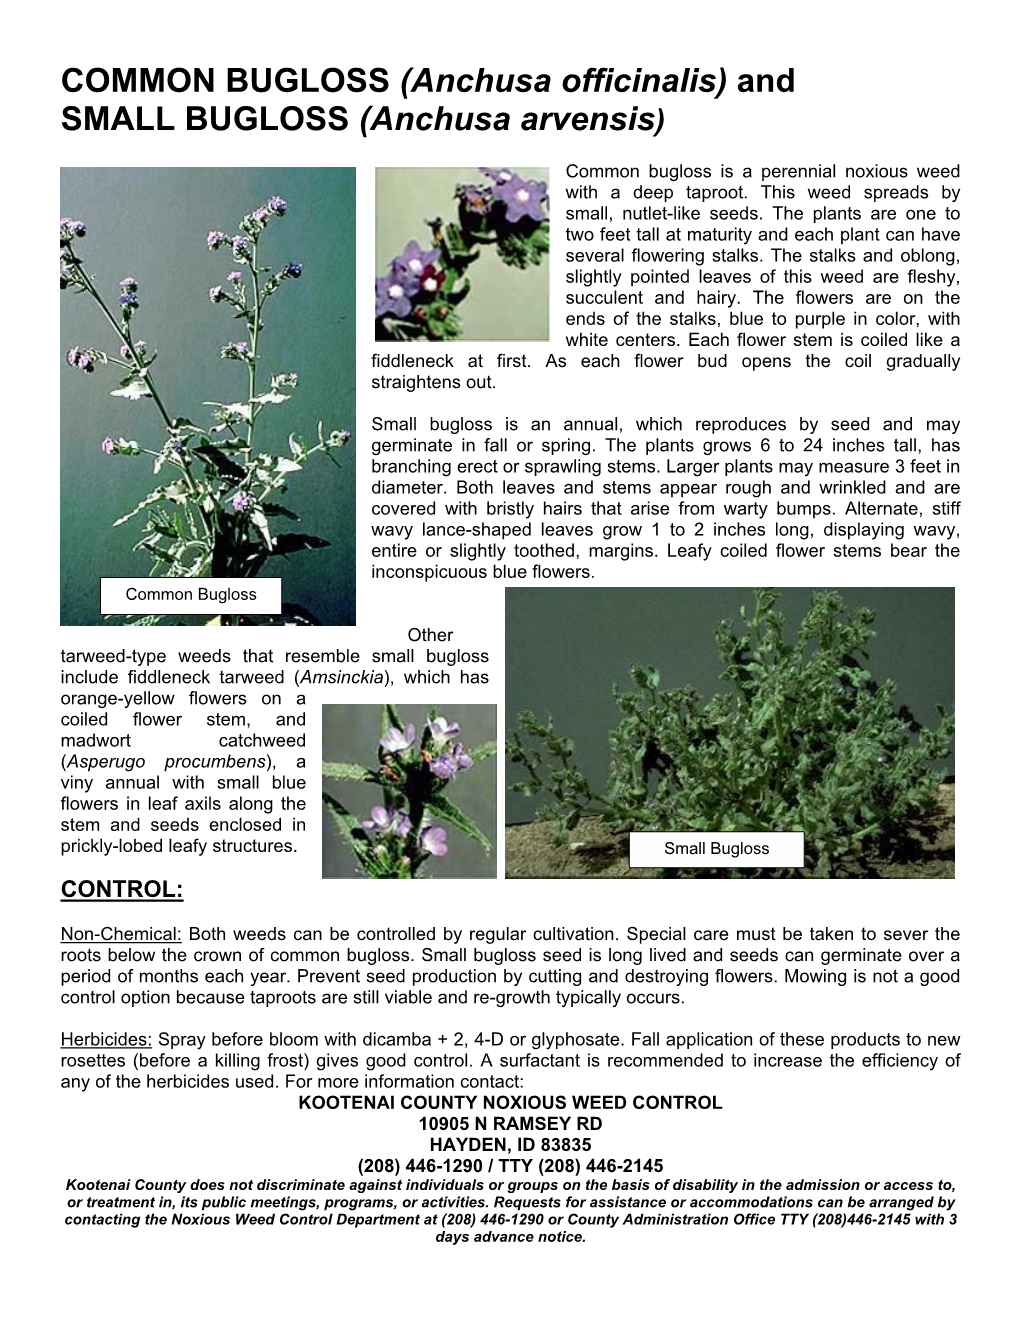 COMMON BUGLOSS (Anchusa Officinalis) and SMALL BUGLOSS (Anchusa Arvensis)